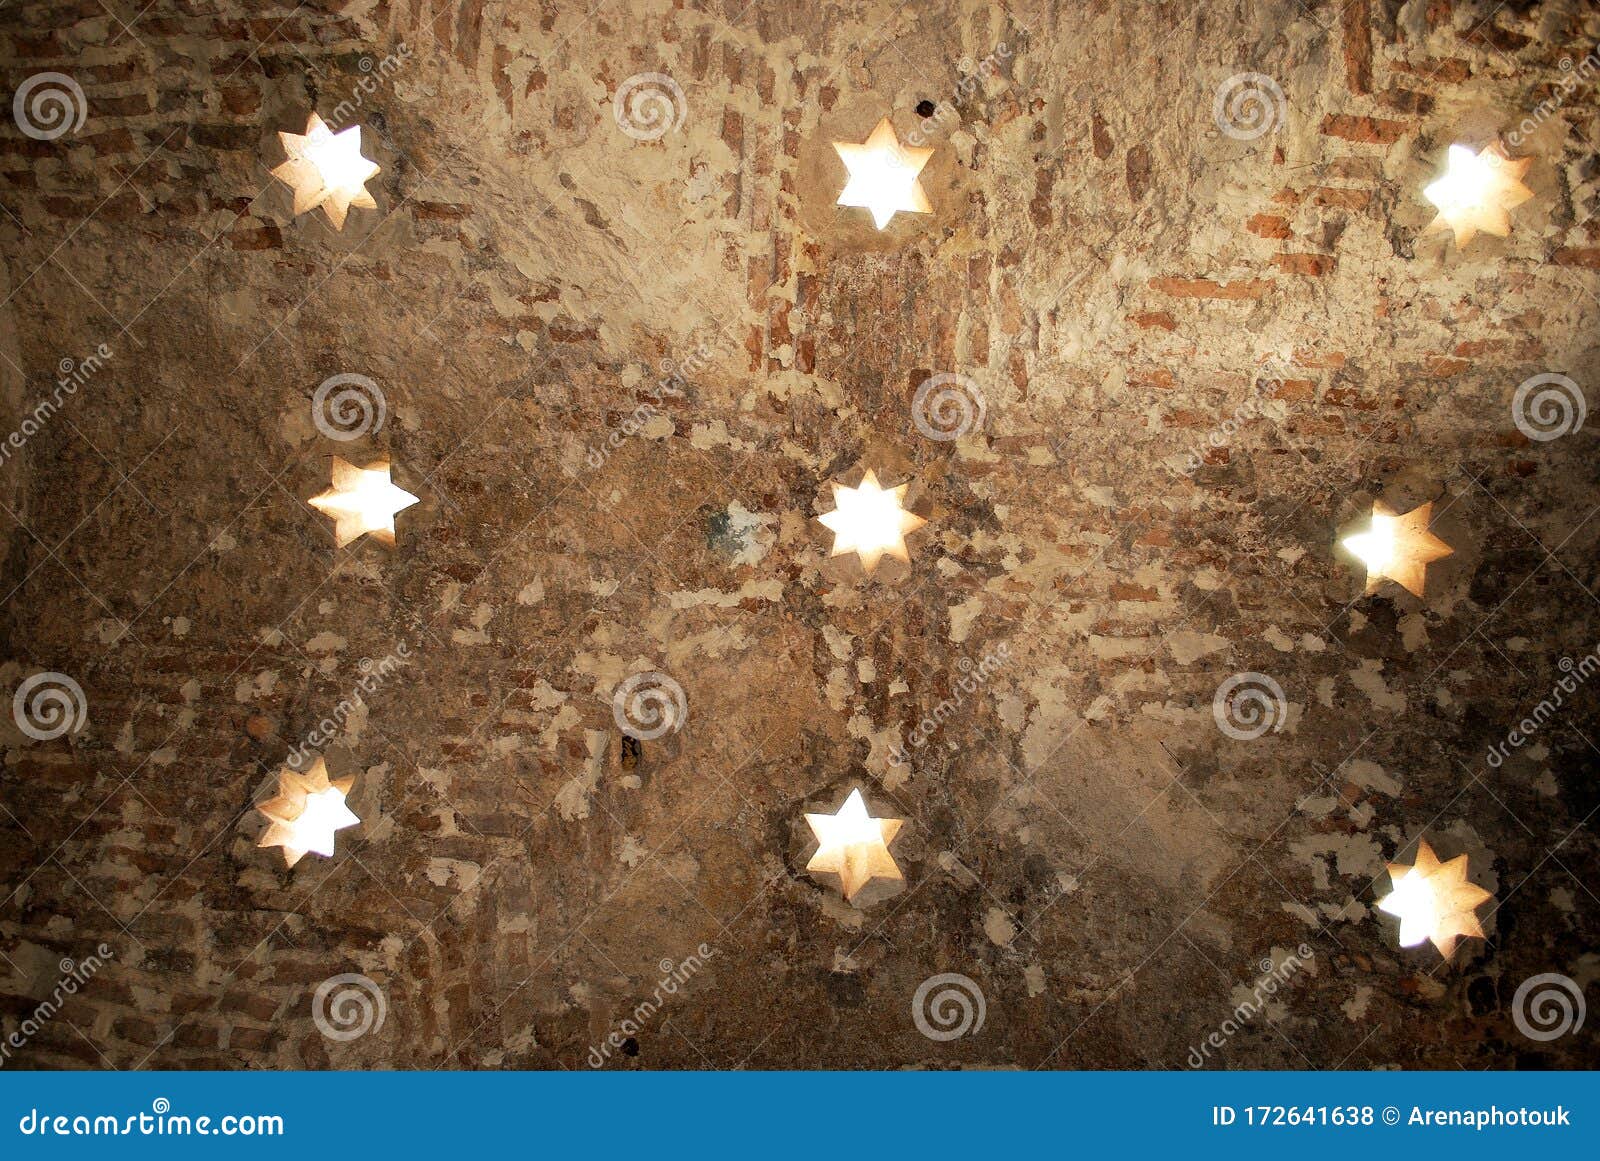 ceiling detail inside the arab baths, jerez de la frontera, spain.